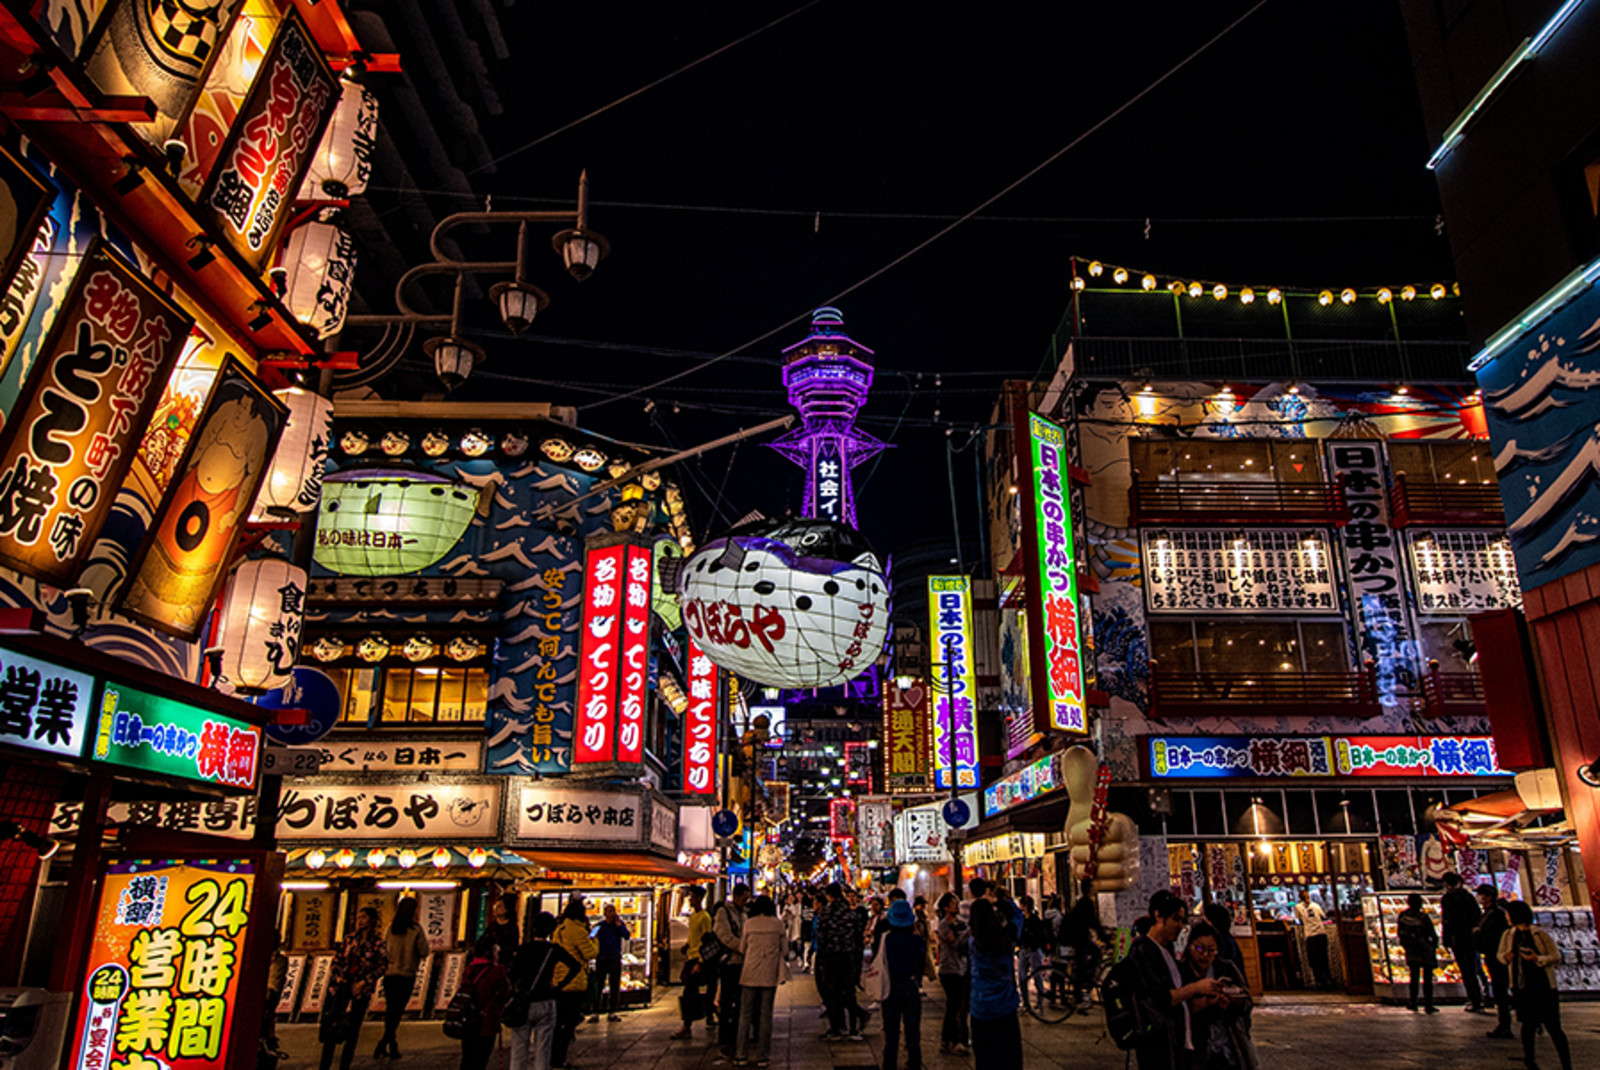 Japanese street lit with neon lights 